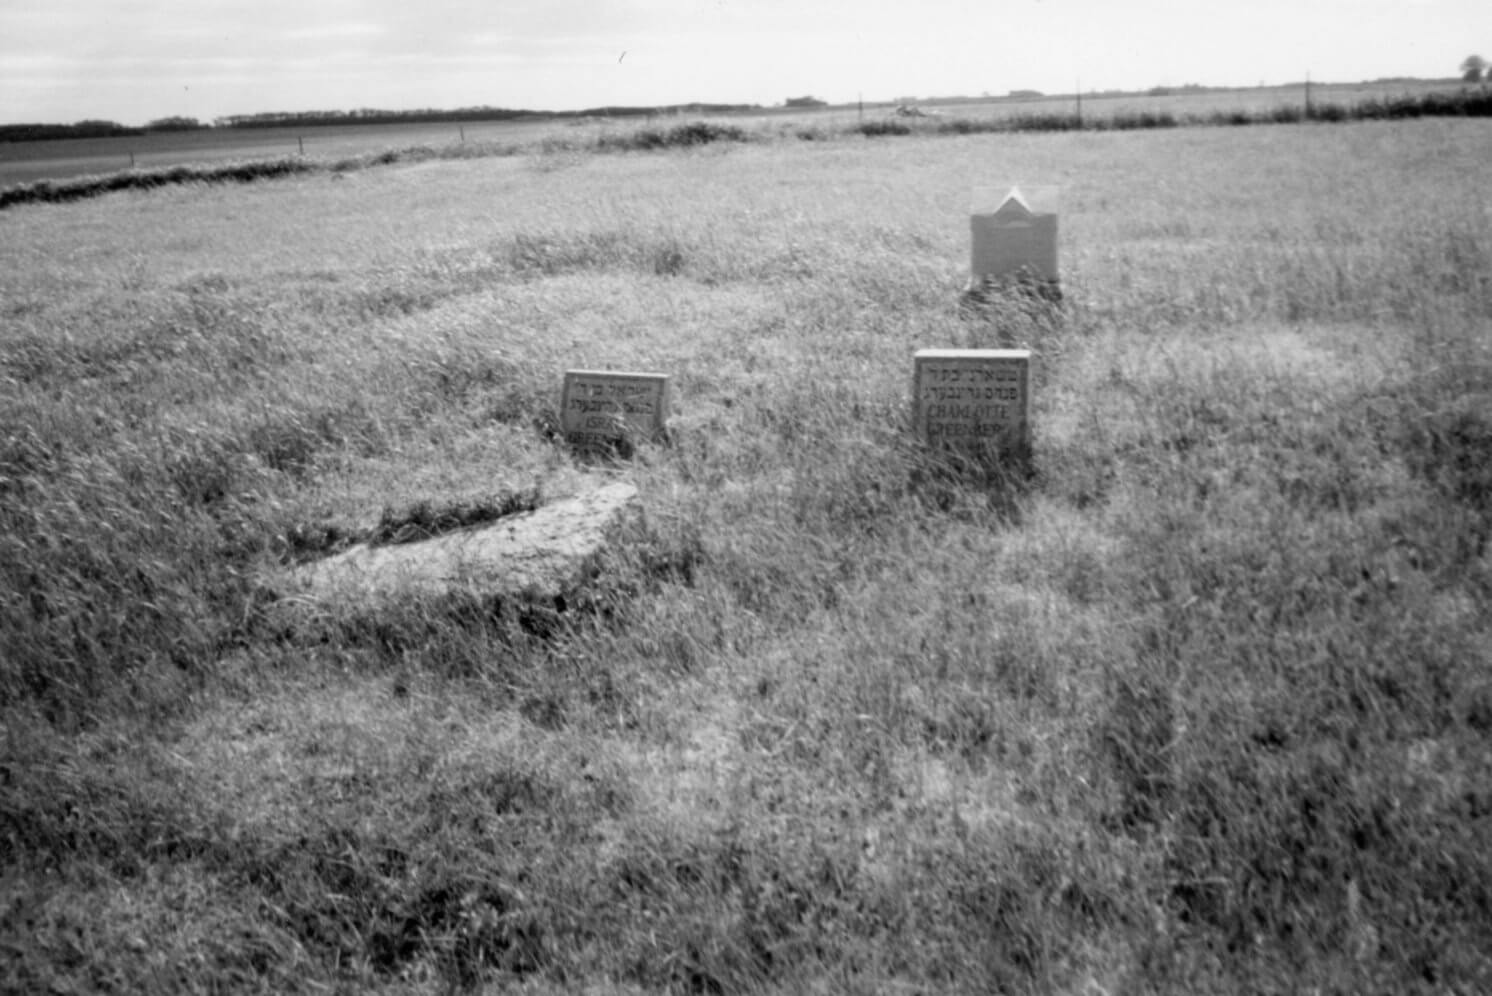 Jewish headstones in an abandoned graveyard in North Dakota. (Courtesy Joyce Greenberg)